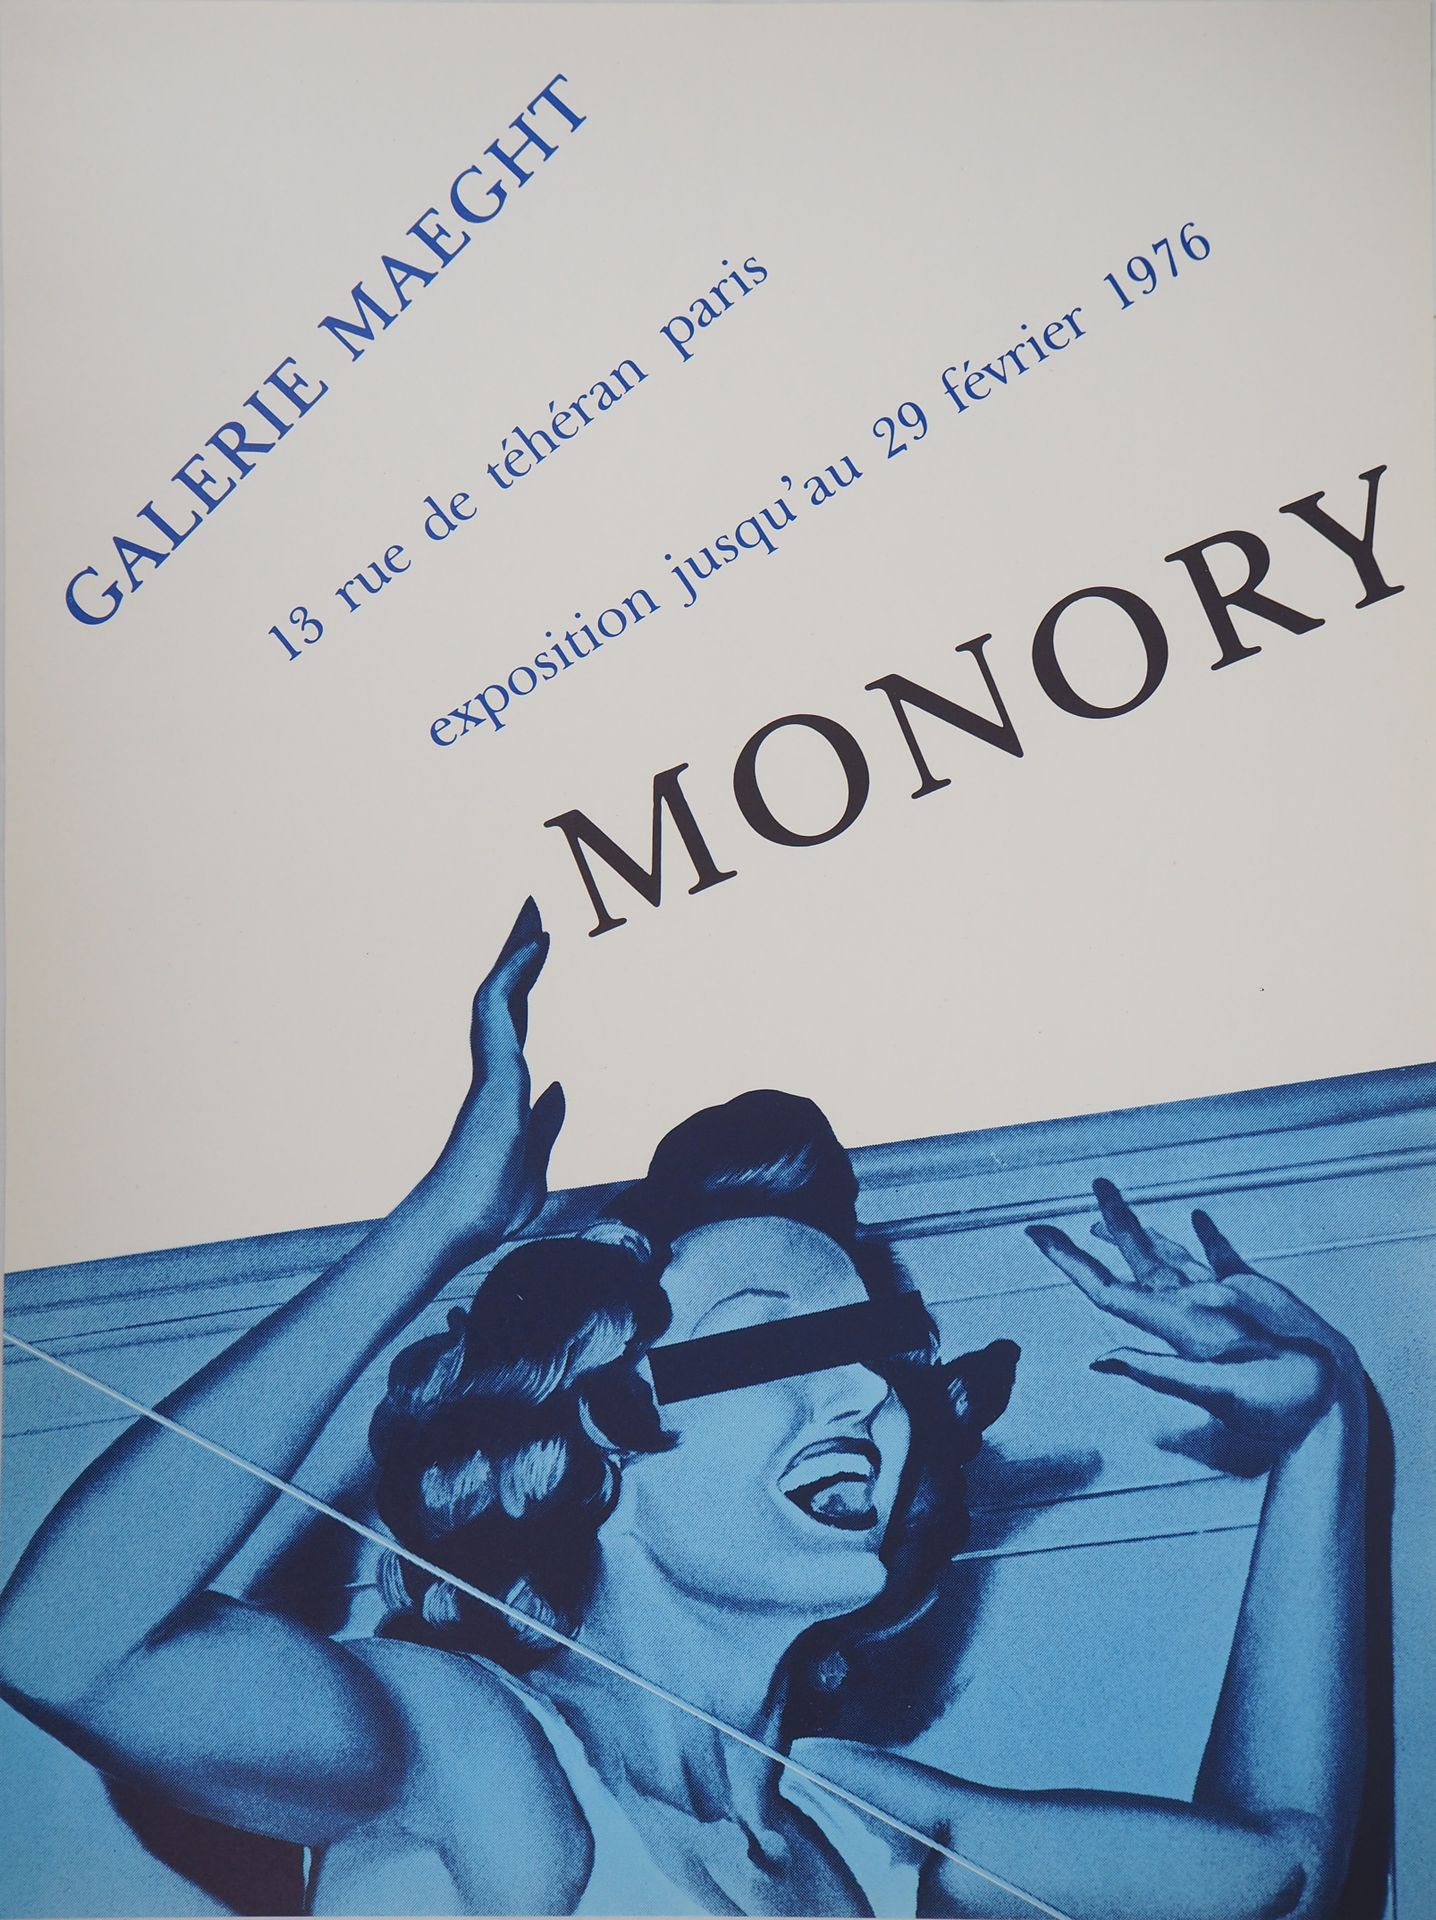 Jacques MONORY Jacques MONORY

Überraschtes Mädchen, 1976

Original lithografier&hellip;